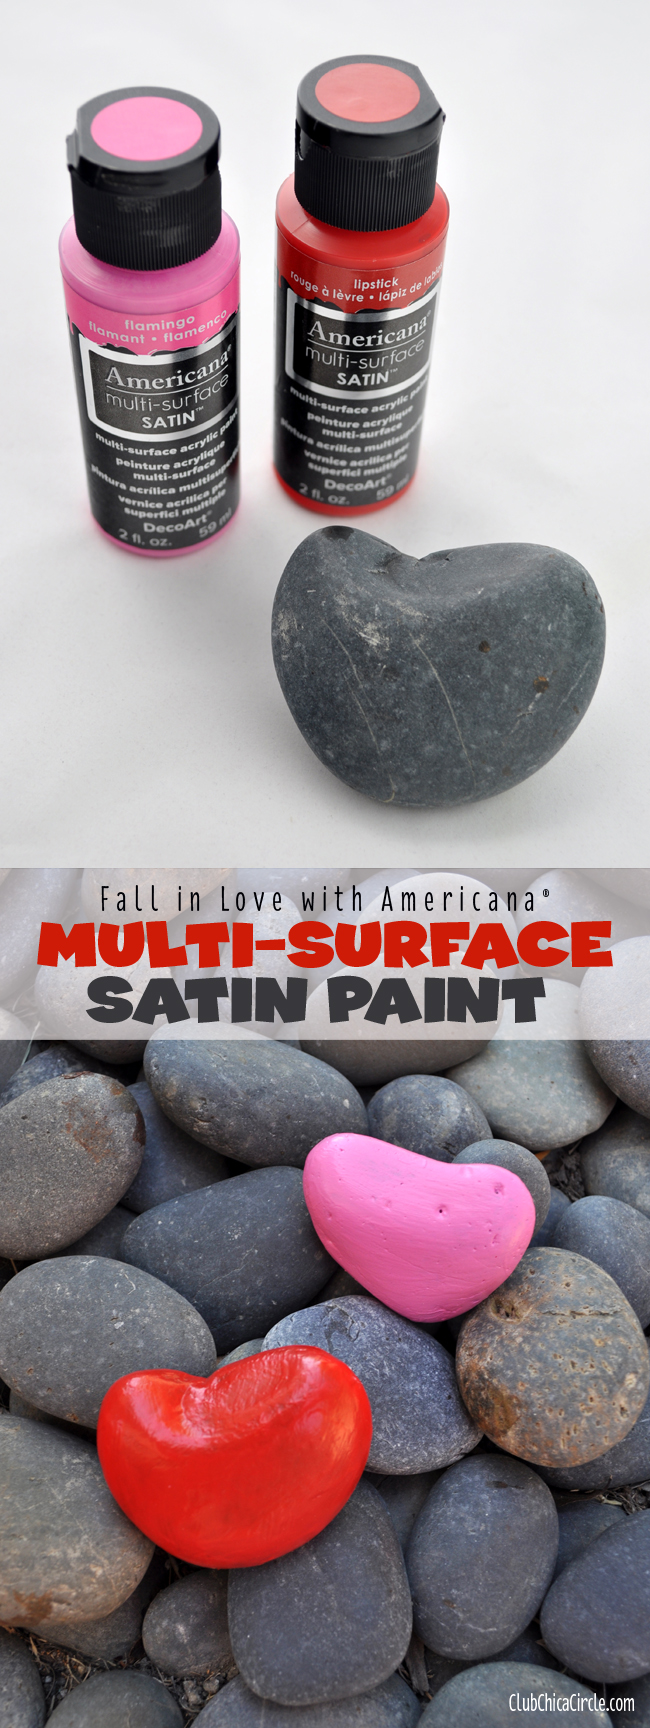 Americana Multi-surface heart shaped painted rocks